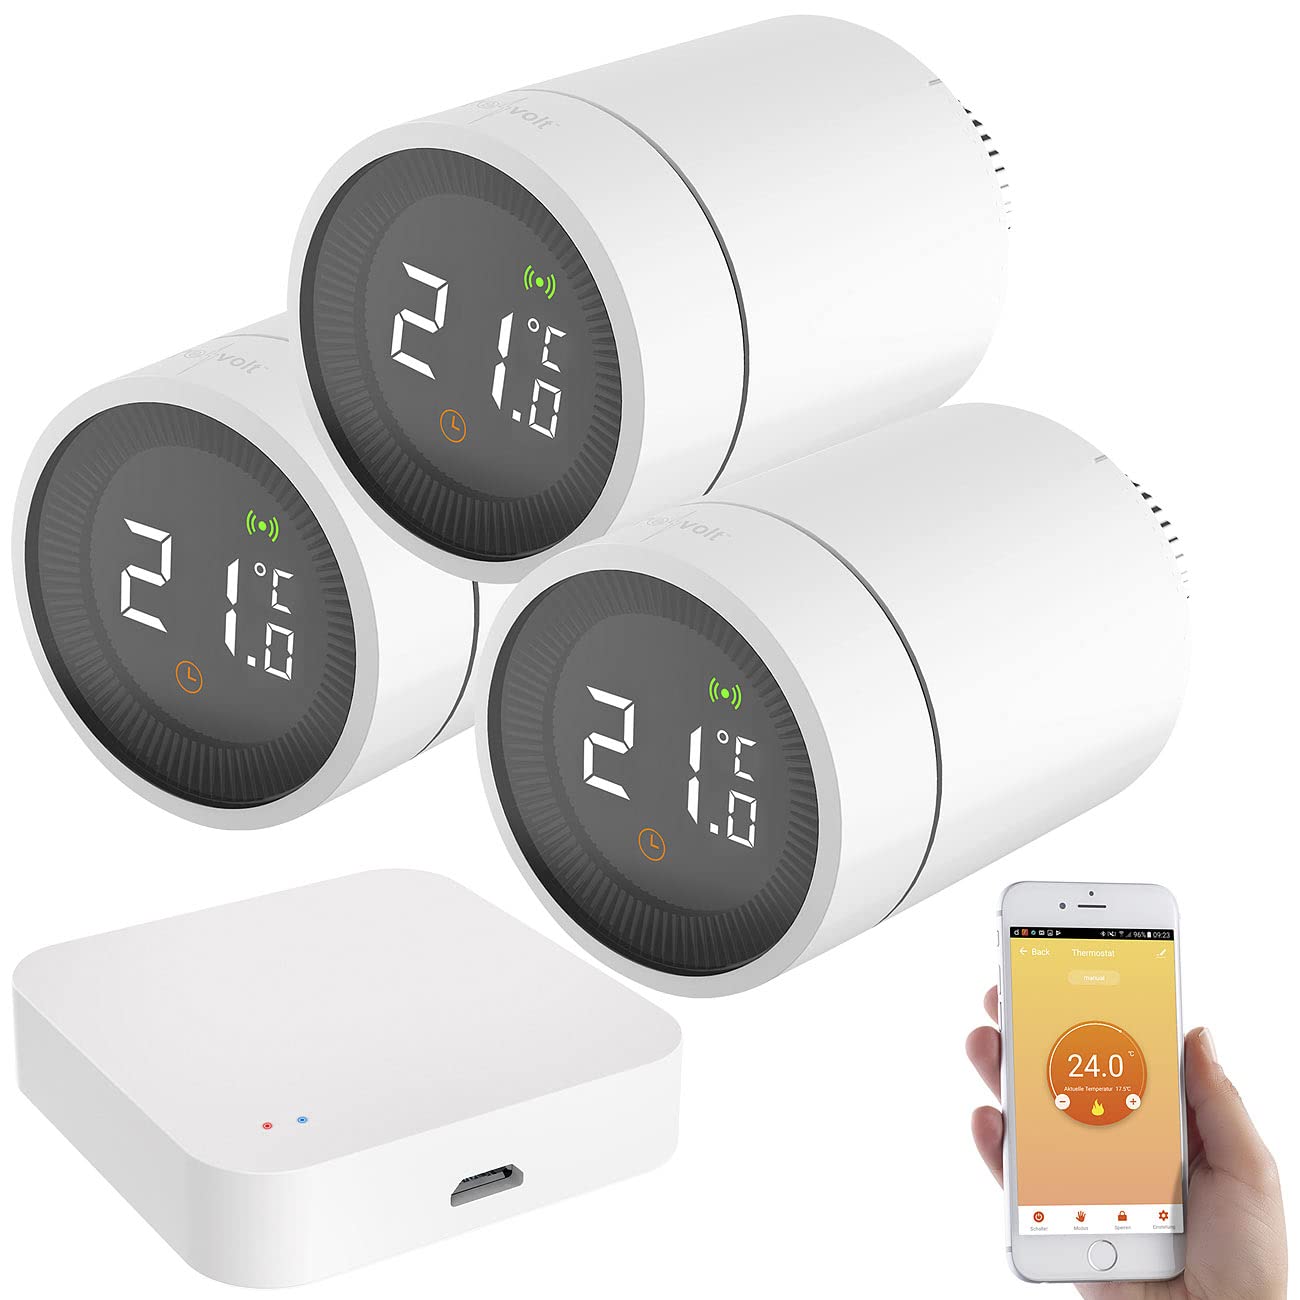 Smart Life ZigBee heating thermostat - 10% discount!